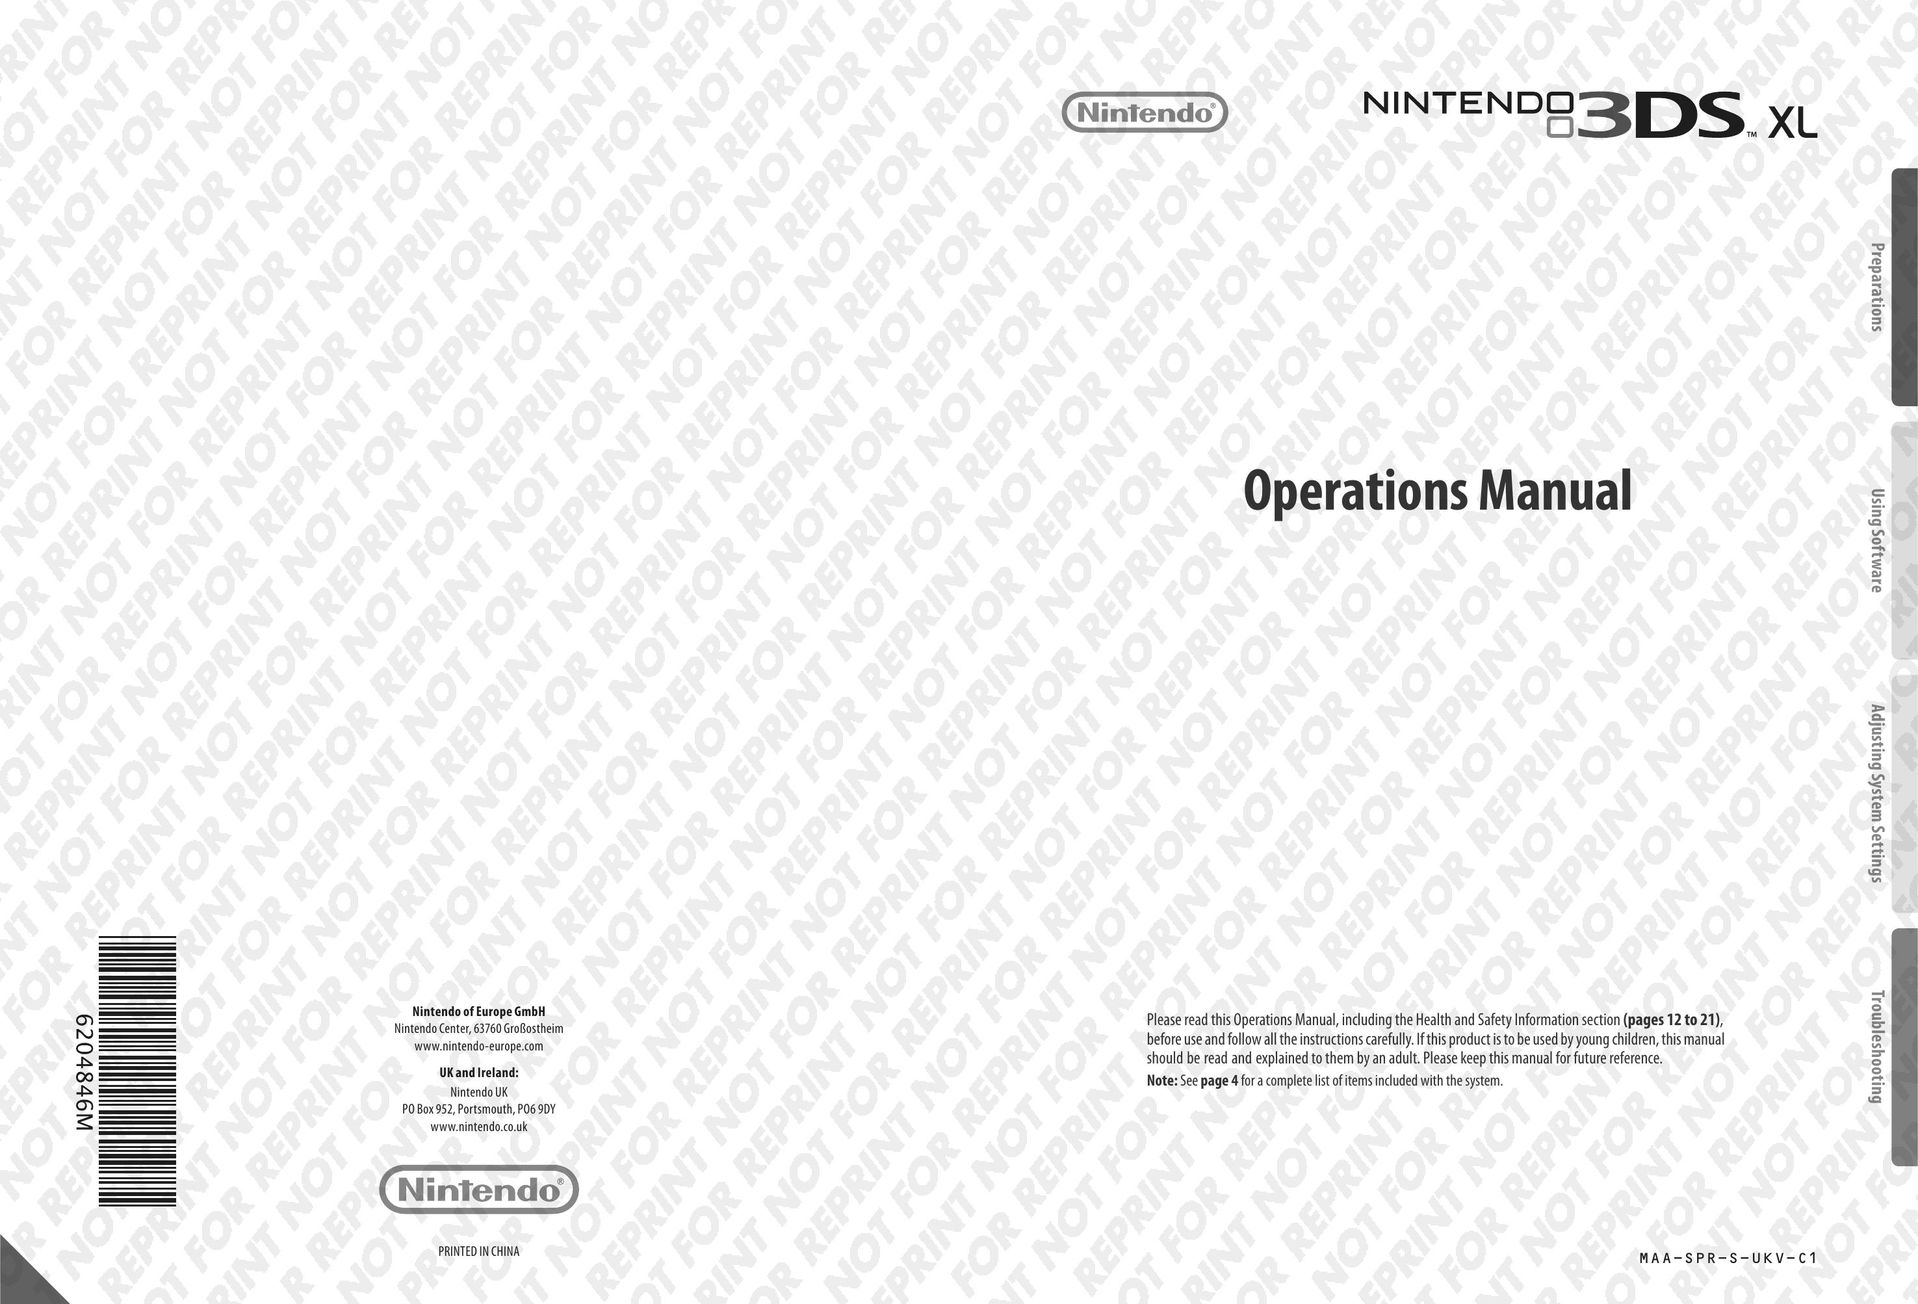 Nintendo SPR-001 Handheld Game System User Manual